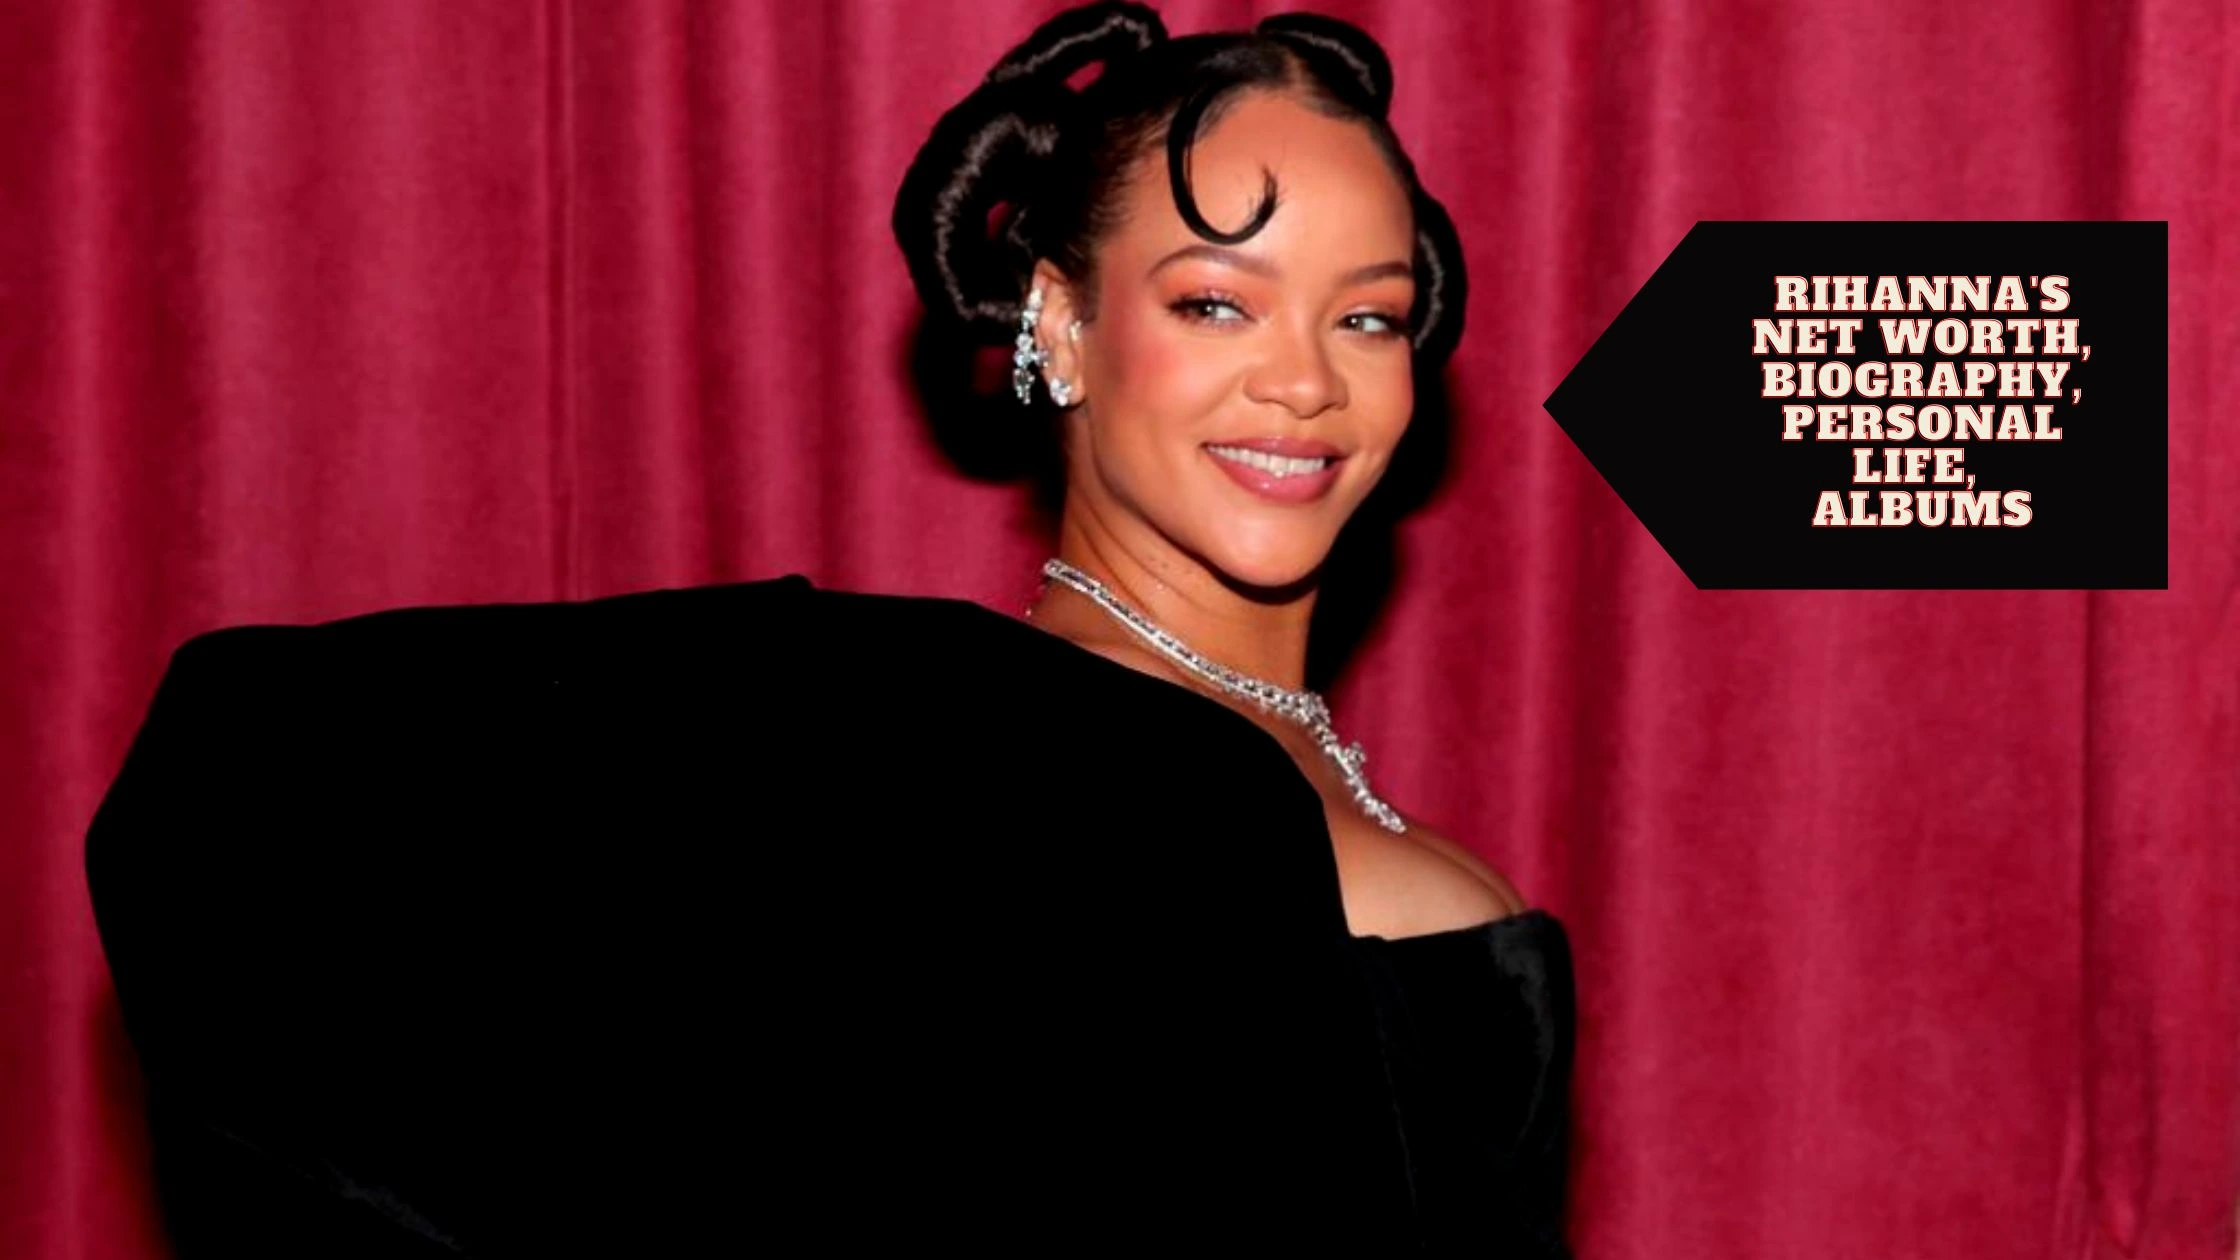 Rihanna's Net Worth, Biography, Personal Life, Albums